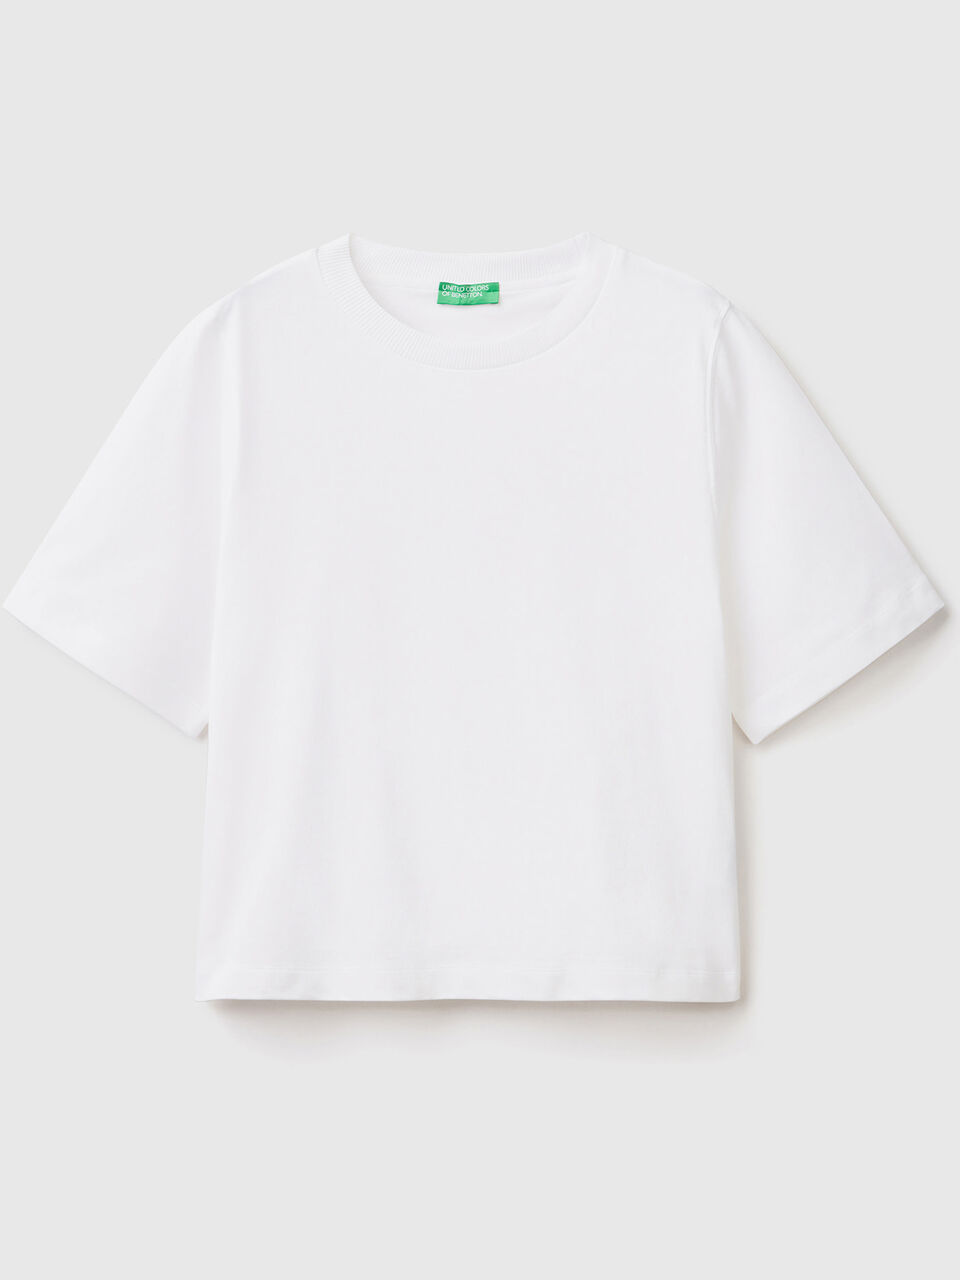 Benetton cotton | White fit t-shirt - 100% boxy